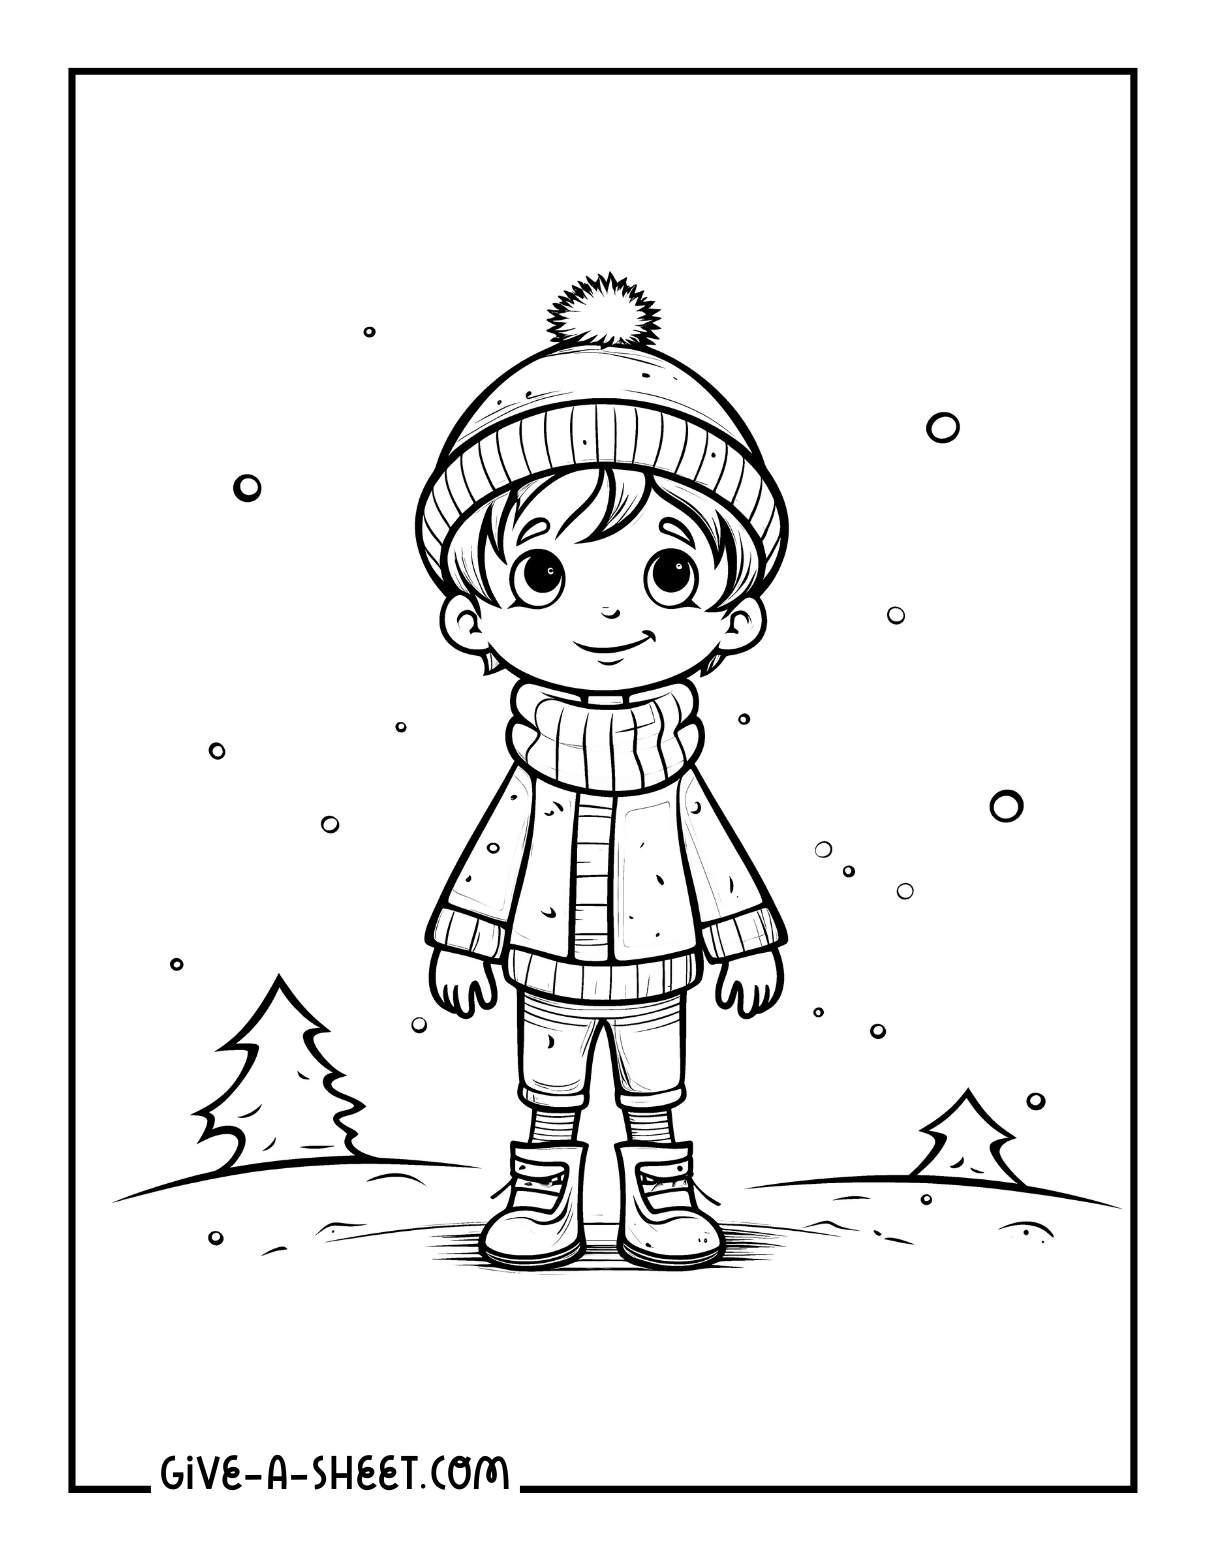 Boy outside wearing winter wardrobe coloring page.